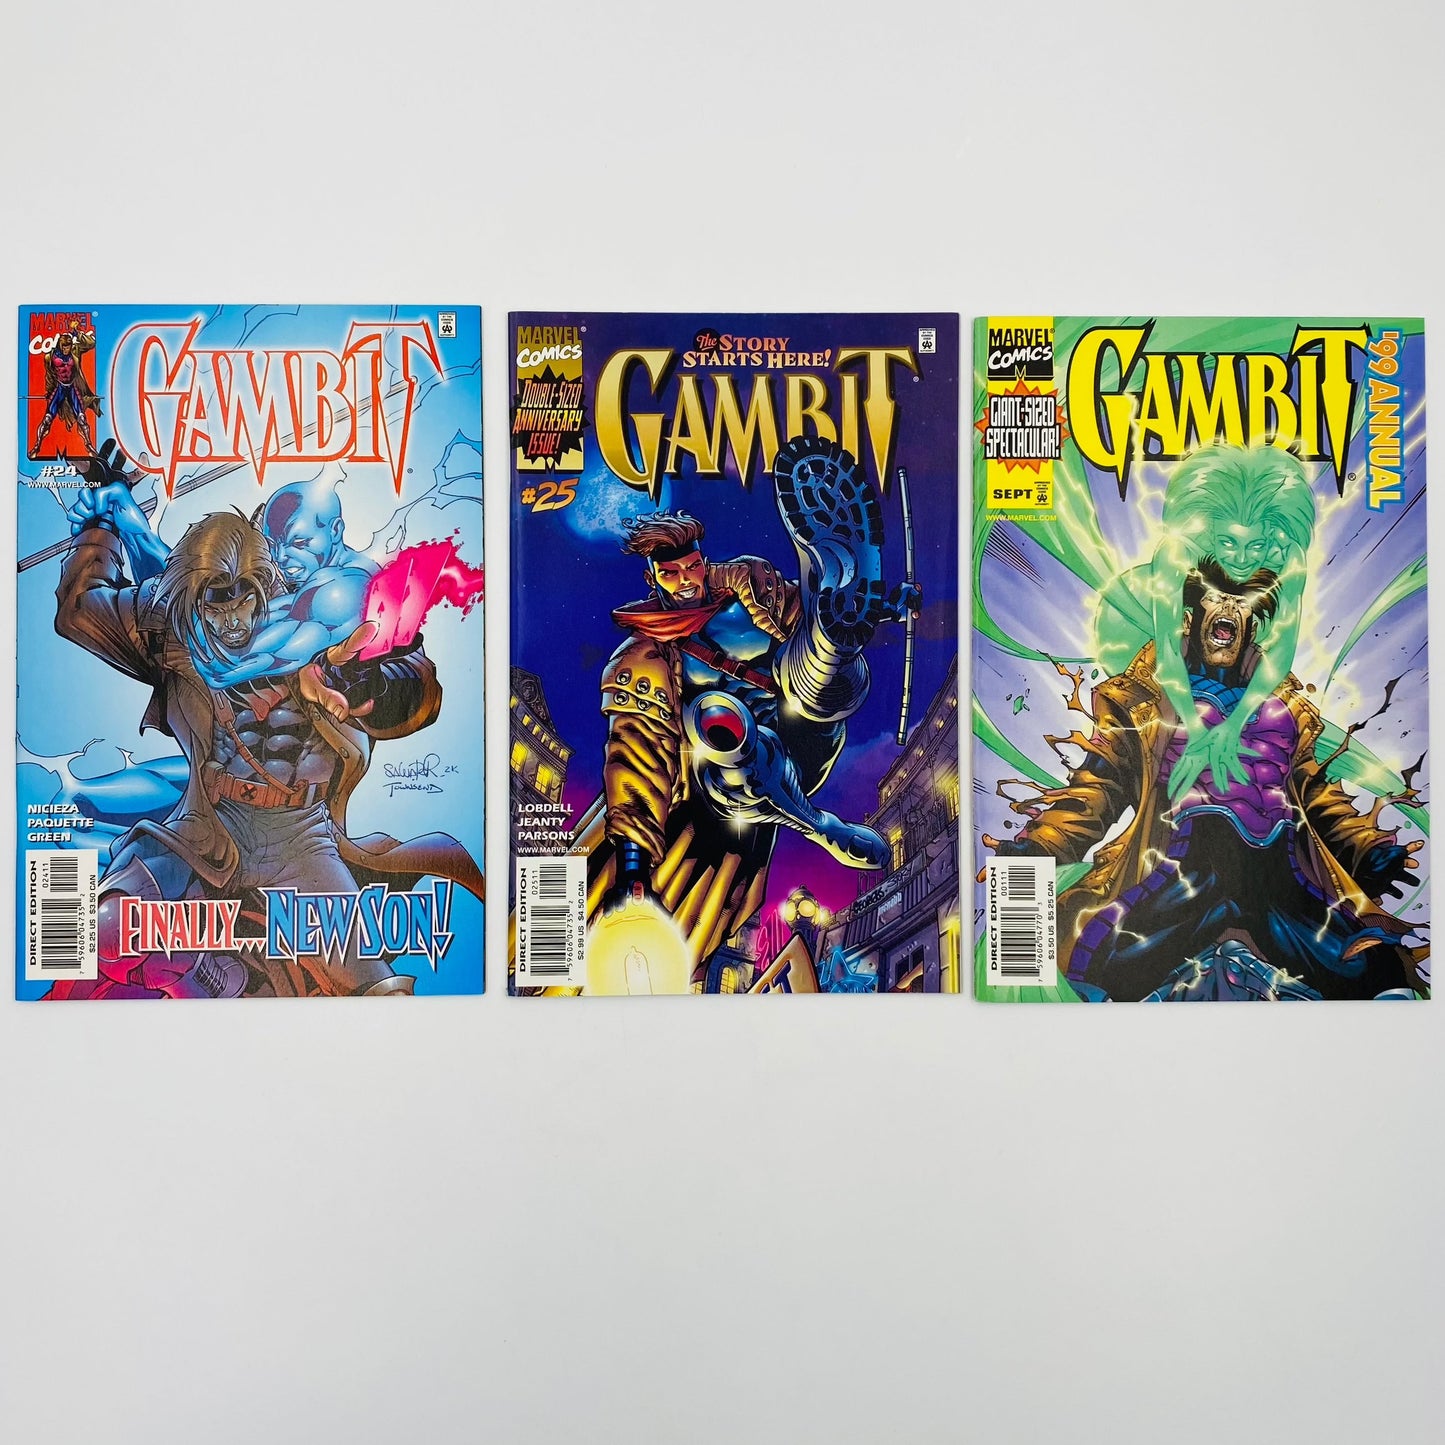 Gambit #1-25 (1998-2001) Gambit Annual 1999 (1999) Gambit Annual 2000 (2000) Marvel